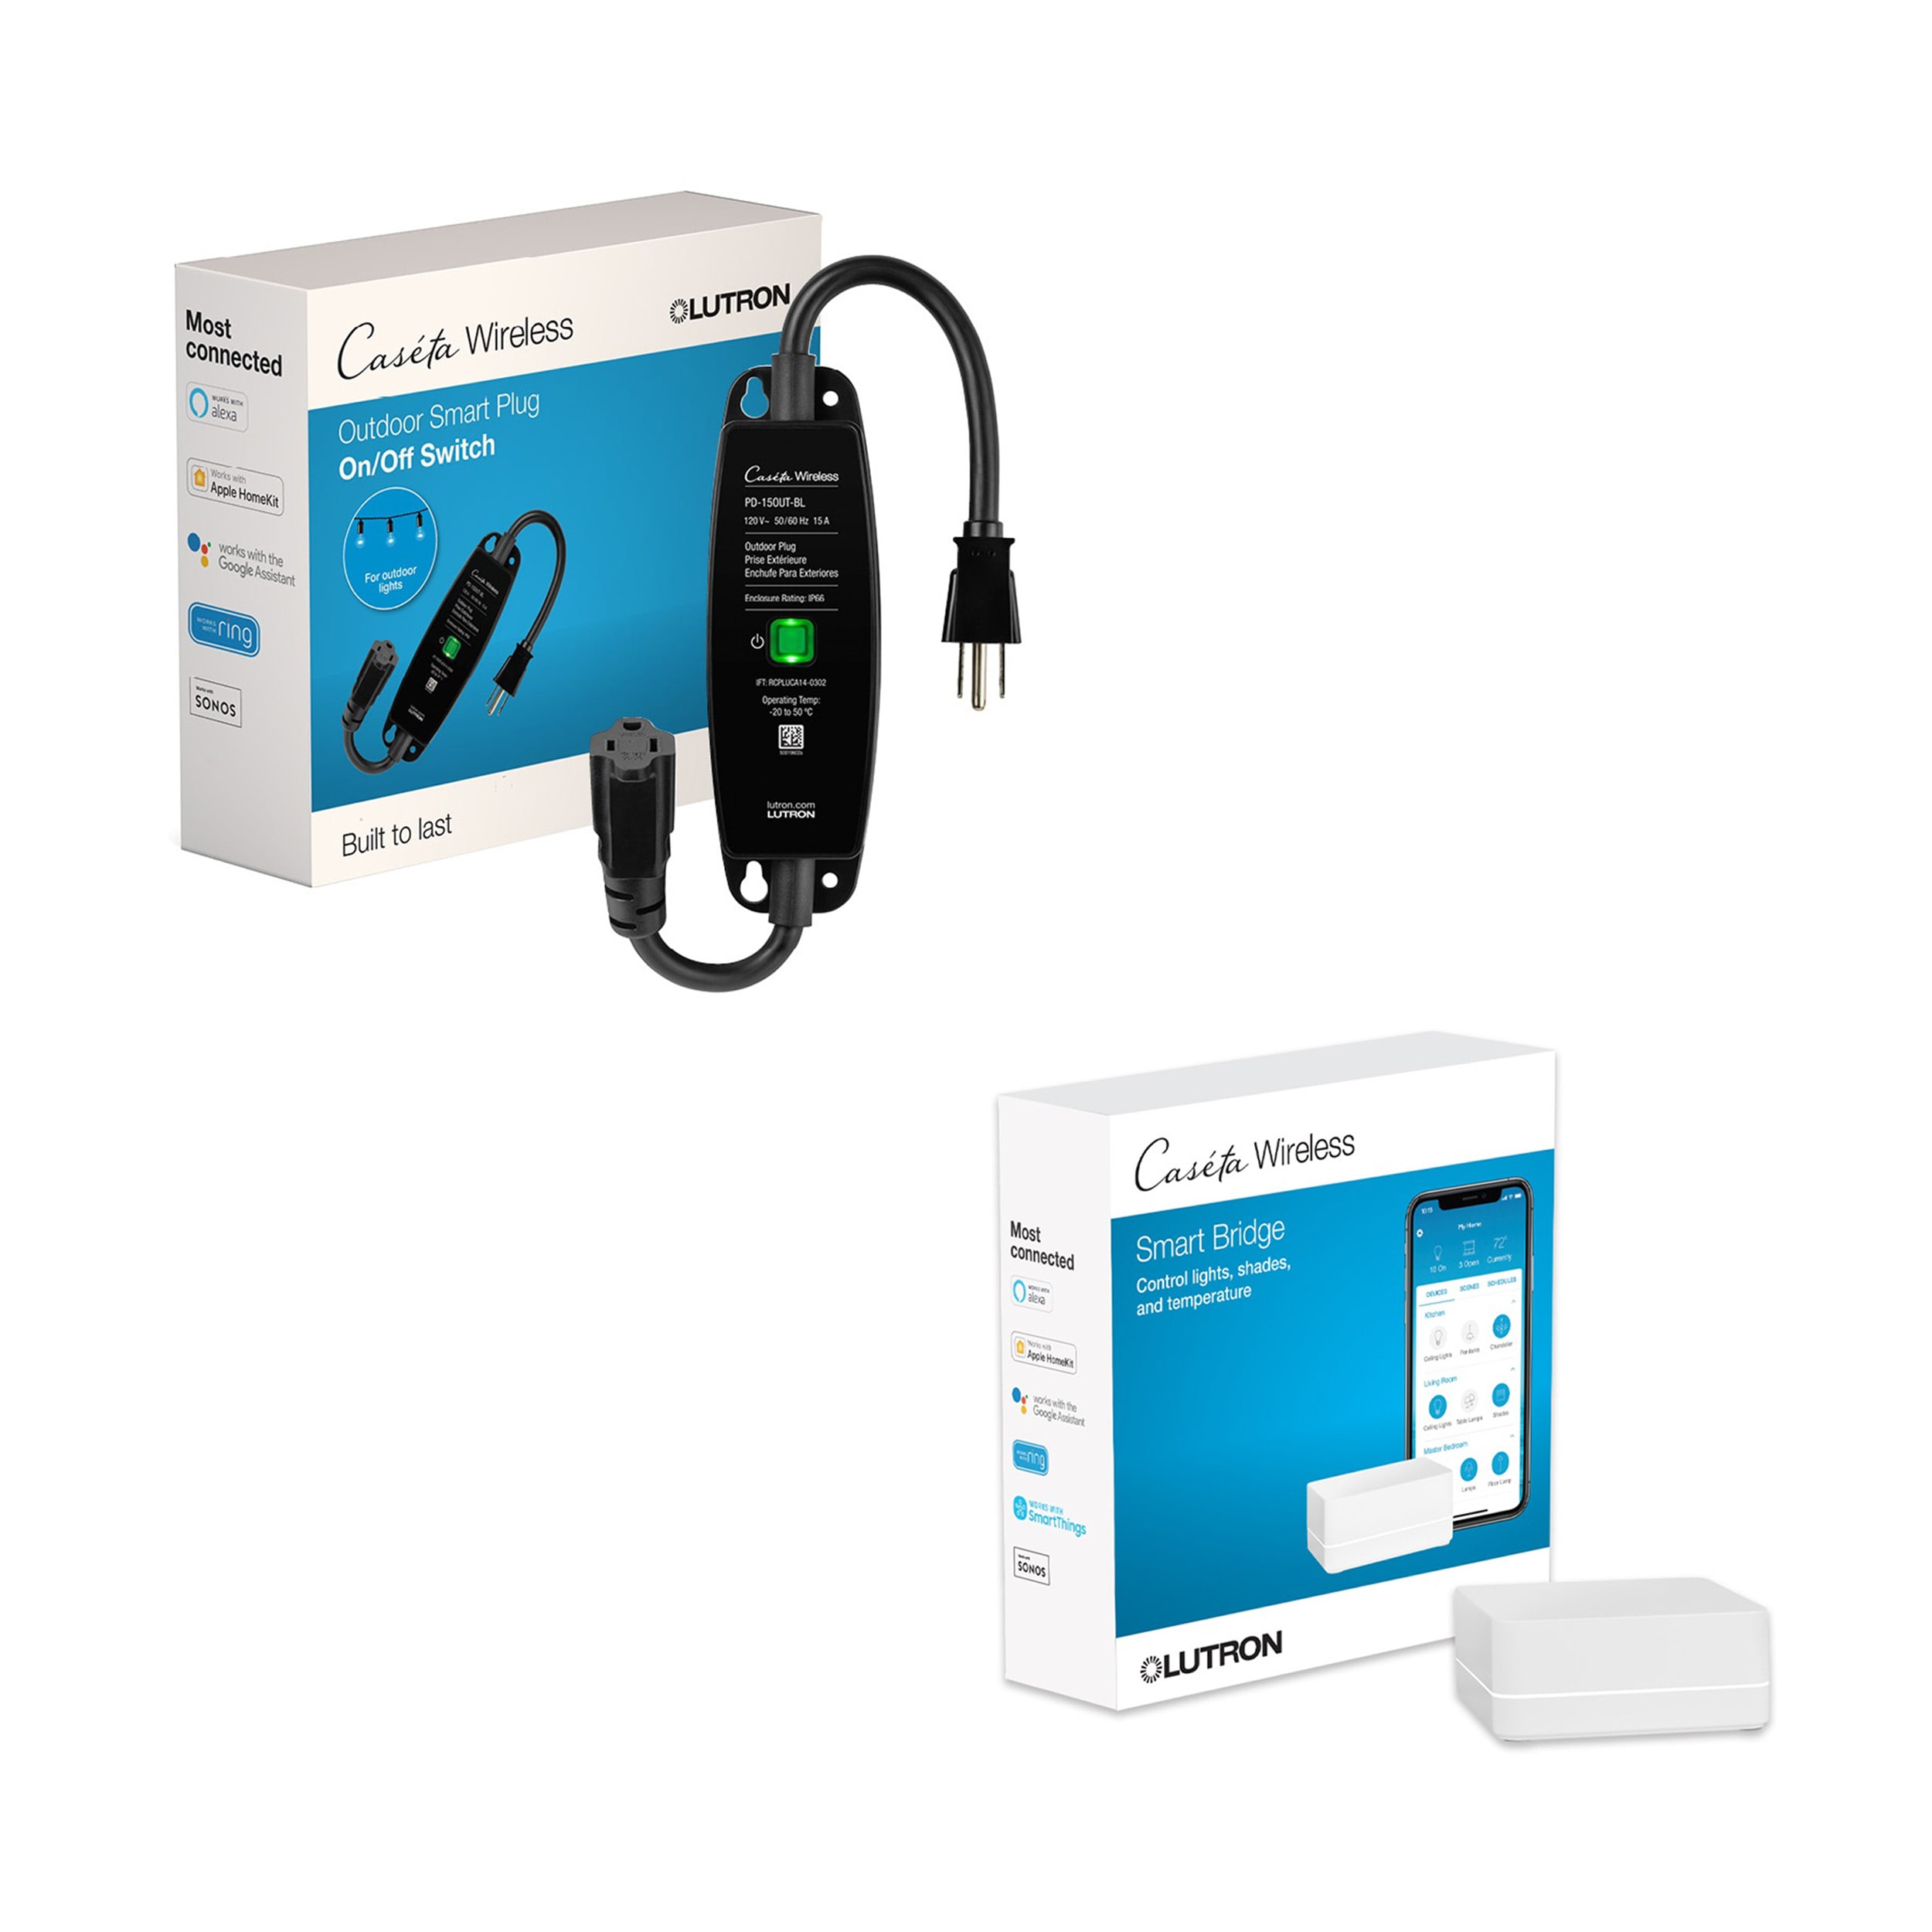 Lutron Caseta Weatherproof+ Outdoor Smart Plug with Pico Remote for  Landscape/String Lights, 15A On/Off, Black (P-PKG1OUT-BL) P-PKG1OUT-BL -  The Home Depot